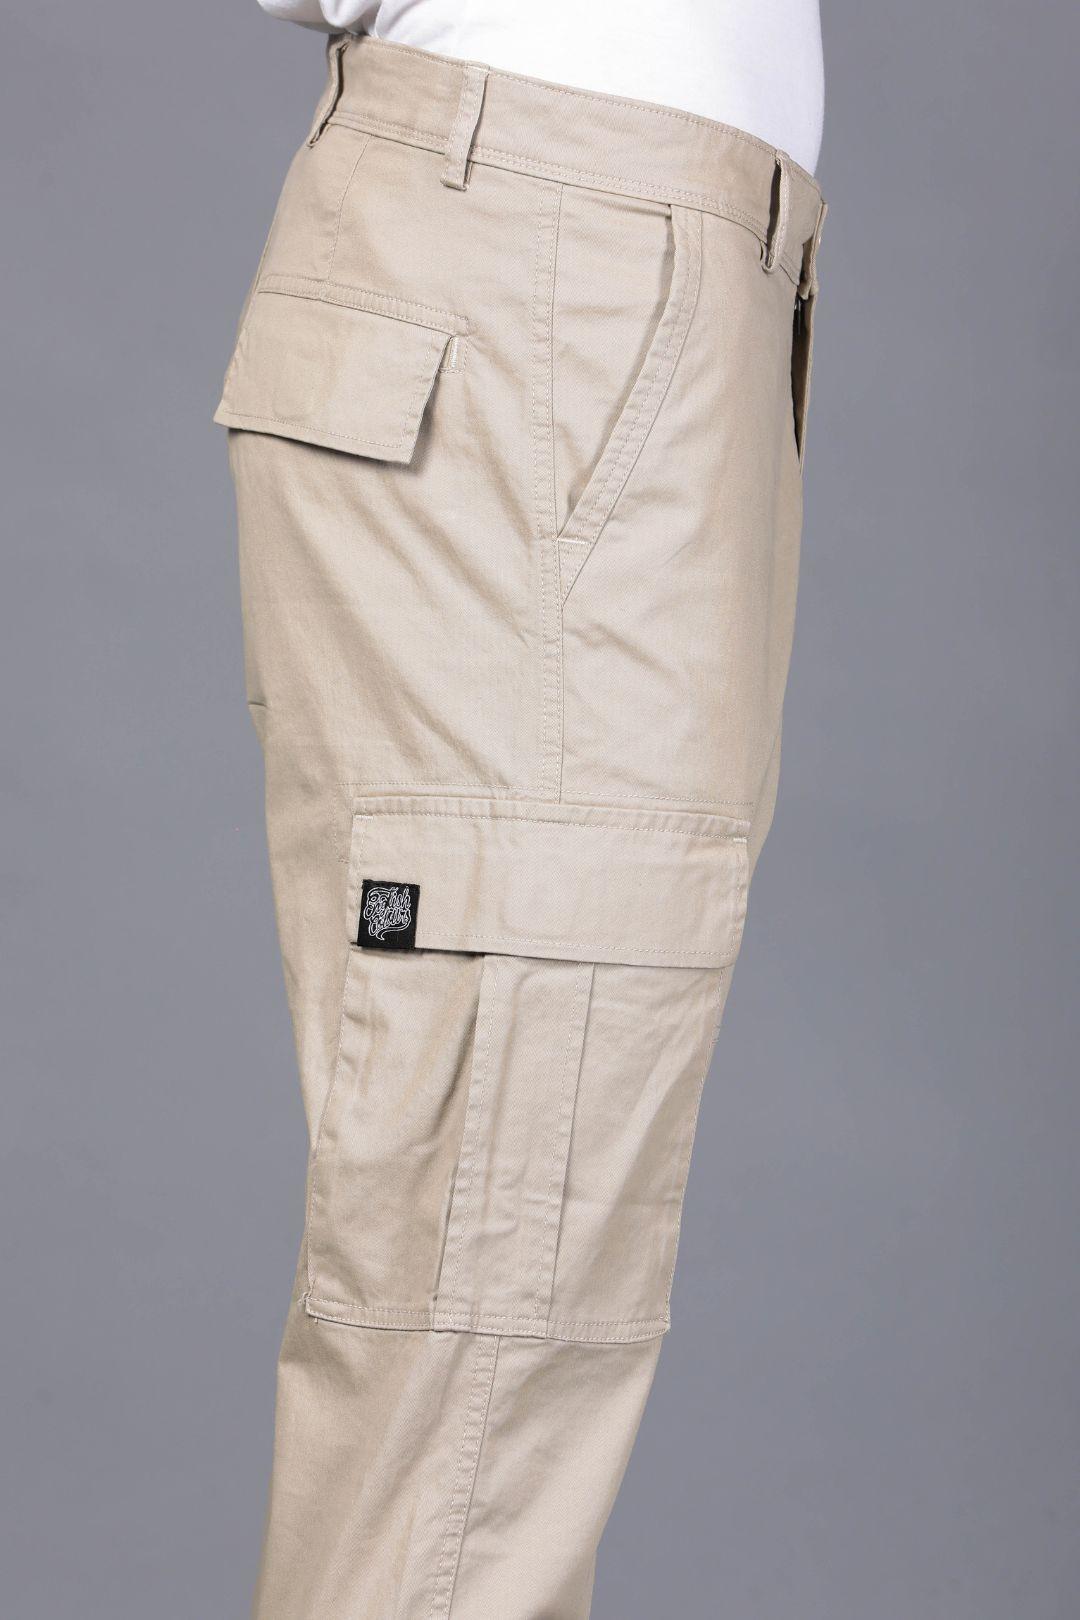 3 Spandex Black Mens 7 Pocket Cargo Pants Size S M L XL XXL